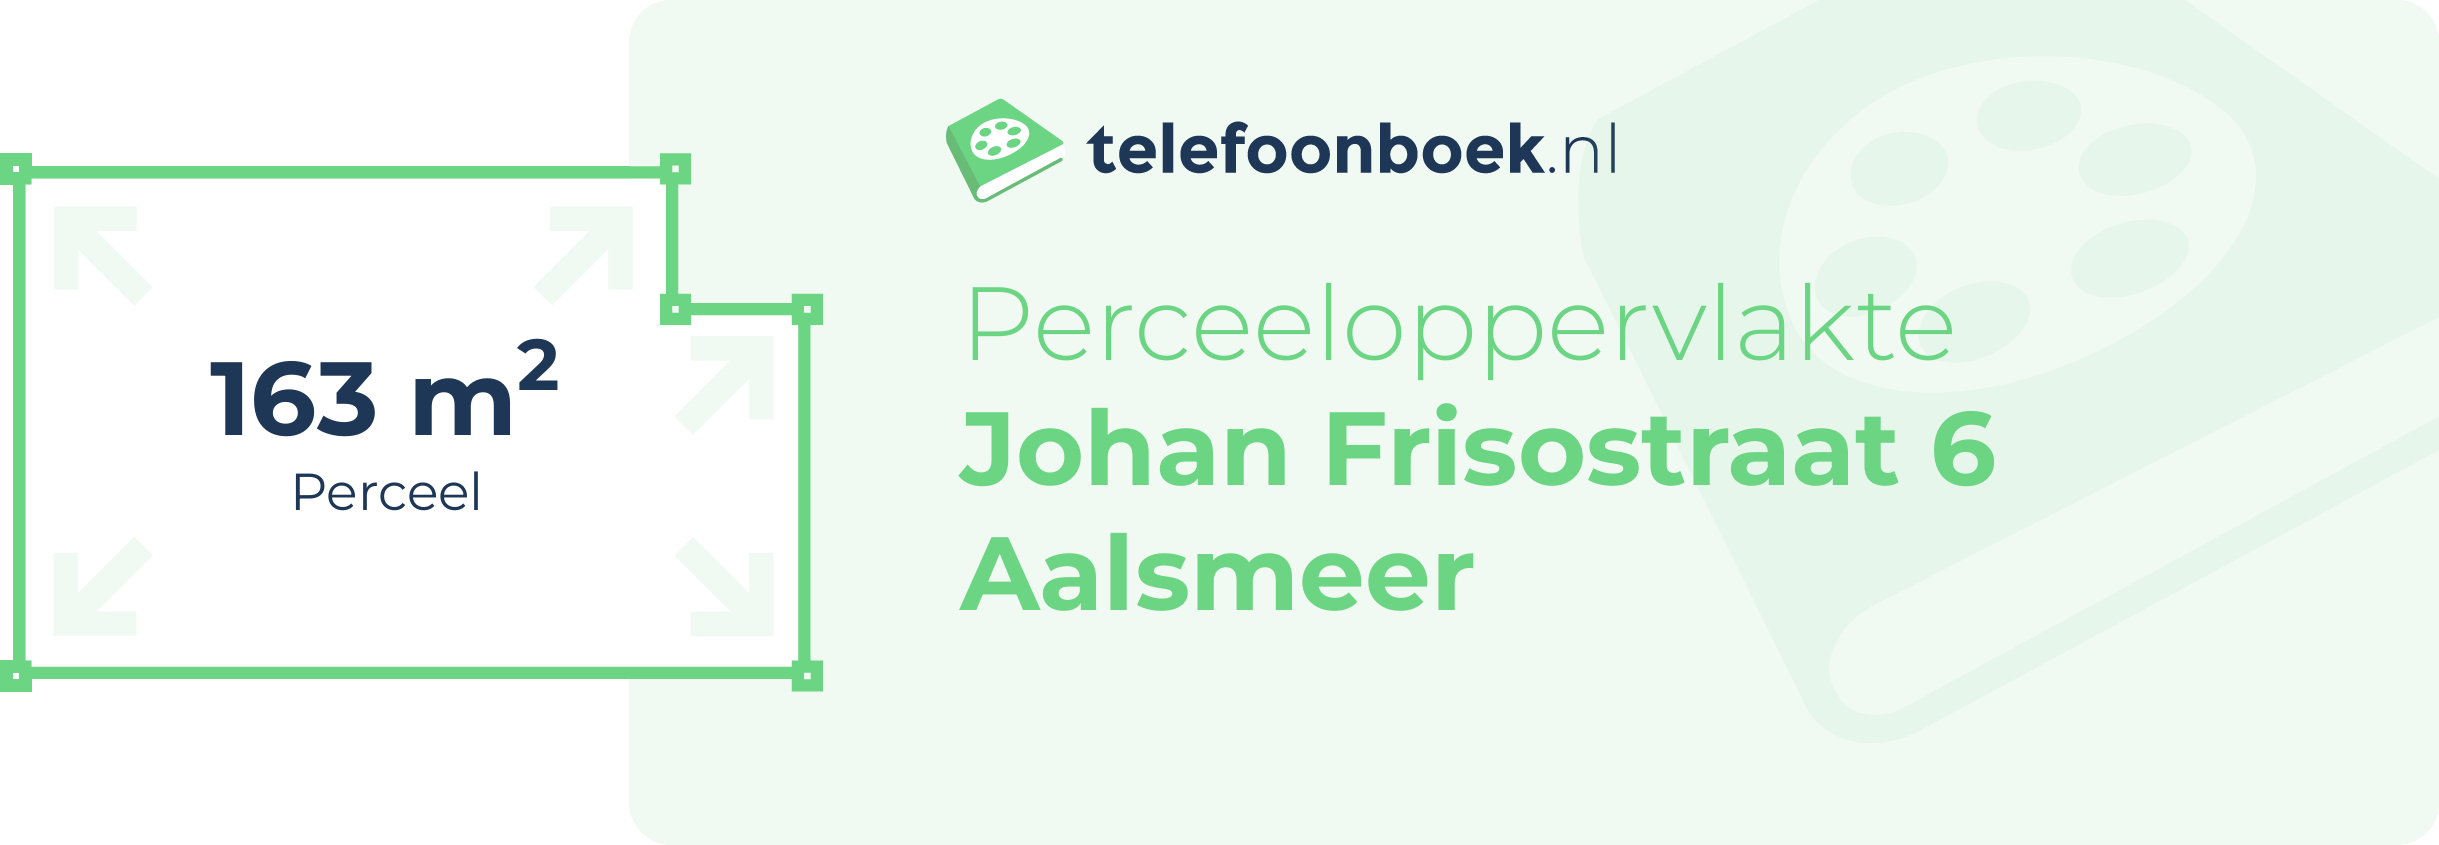 Perceeloppervlakte Johan Frisostraat 6 Aalsmeer